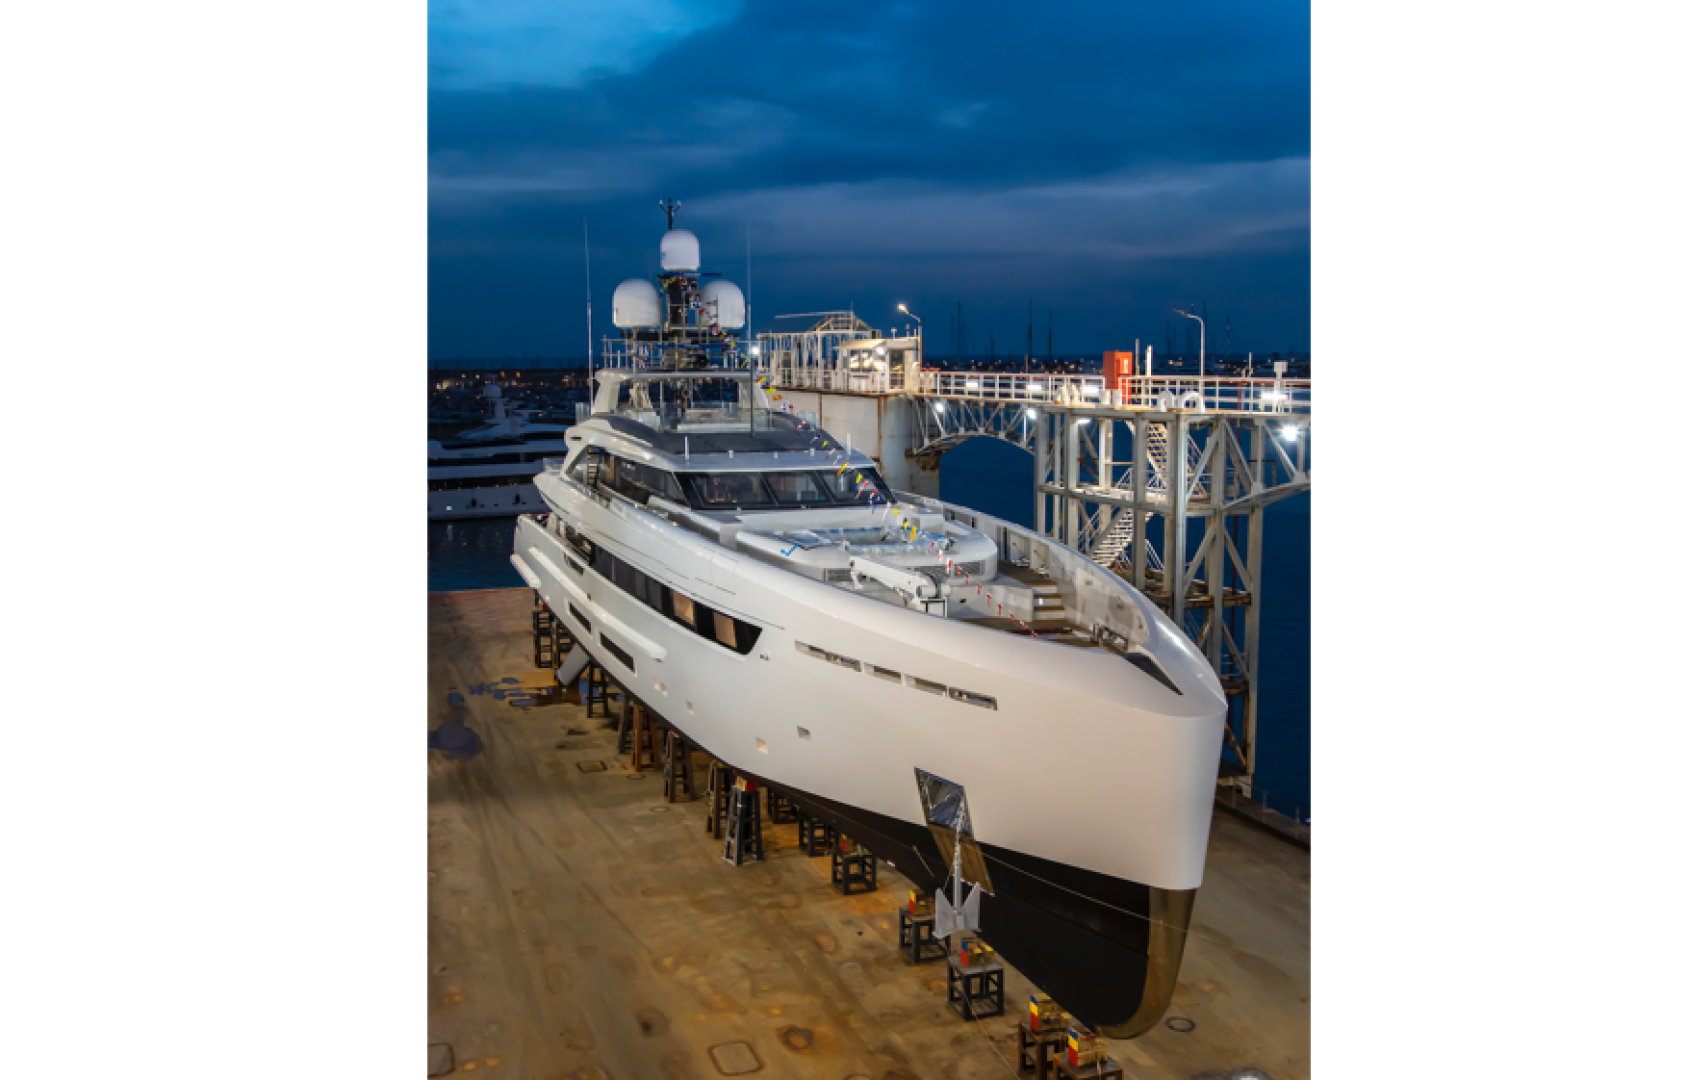 Tankoa 4th all-alluminum 50mt hybrid superyacht launched